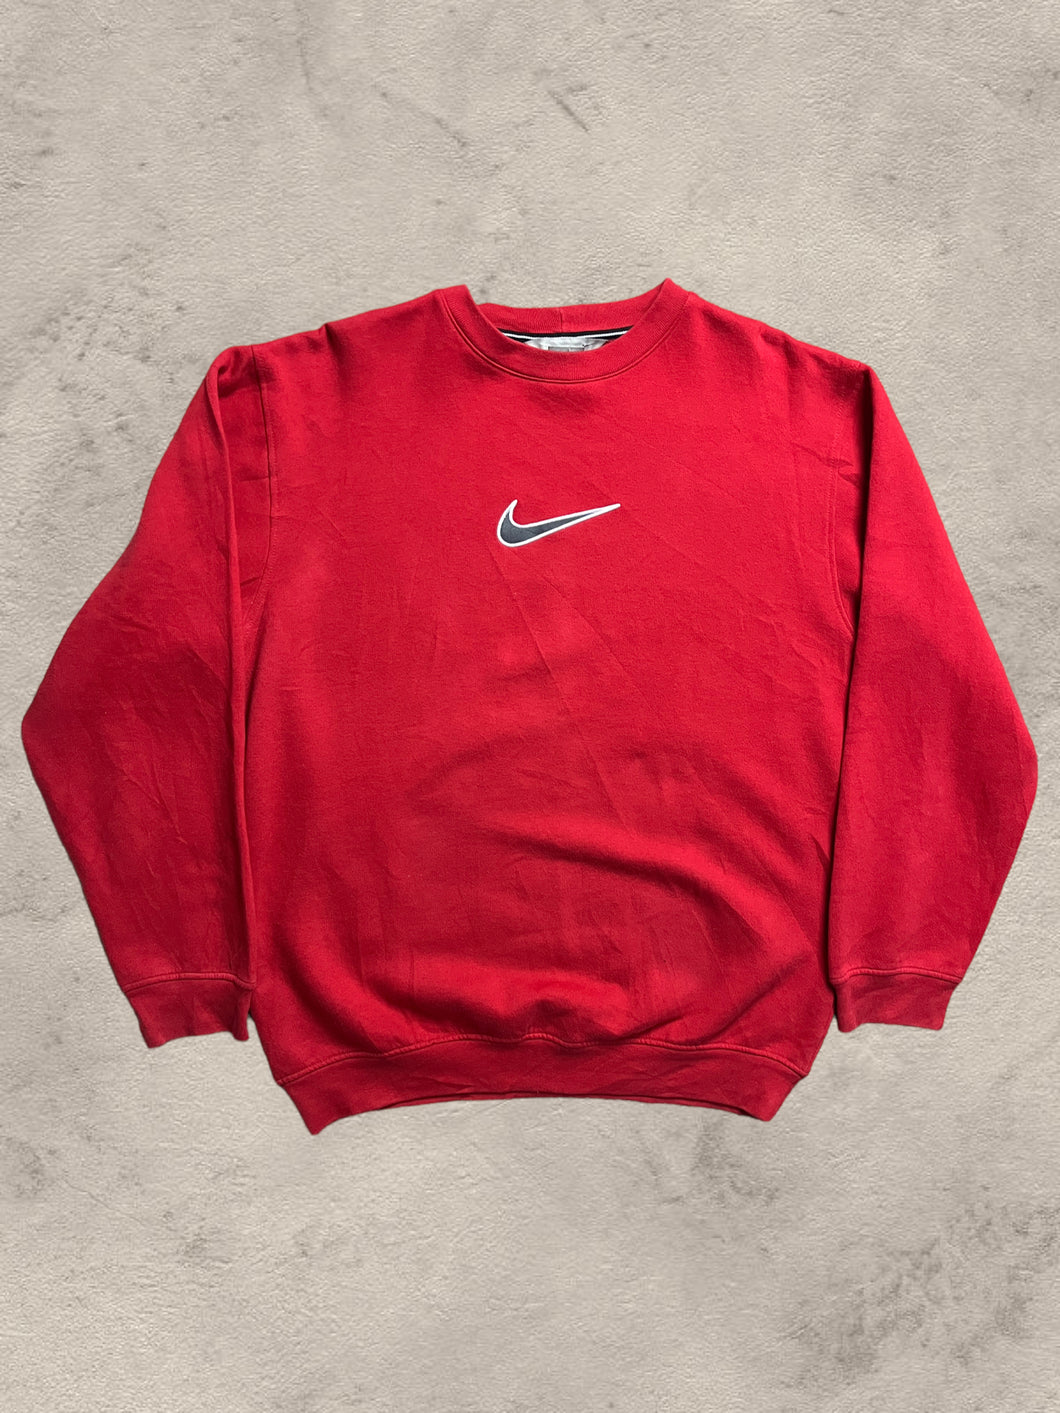 Vintage Nike Middle Swoosh Sweatshirt - XL